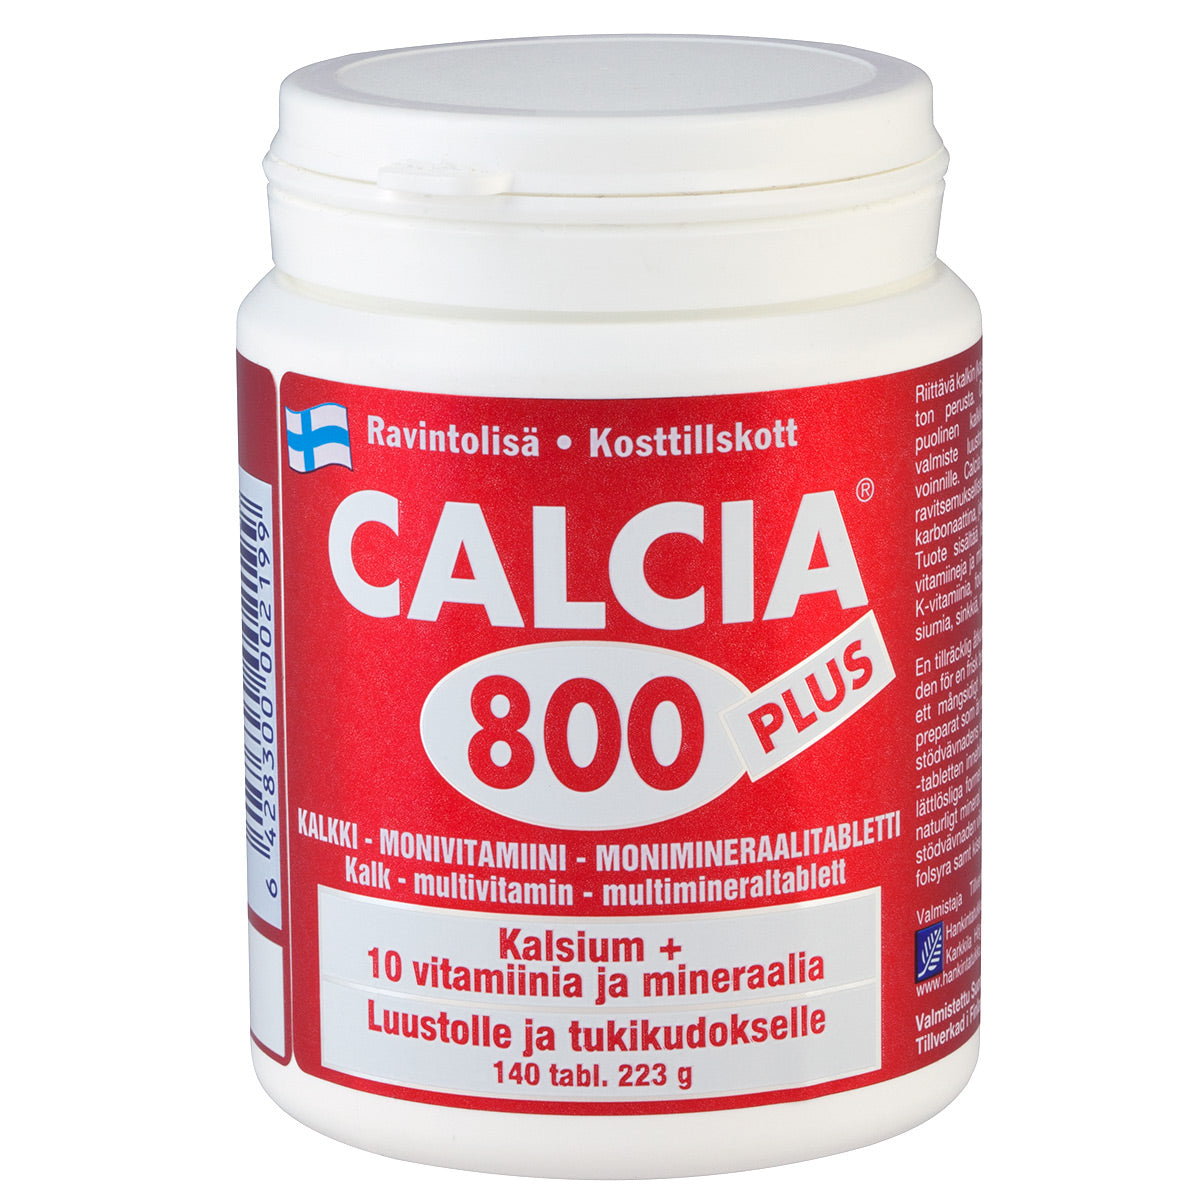 Calcia 800 Plus - Kalkki-monivitamiini-monimineraalitabletti 140 tabl.